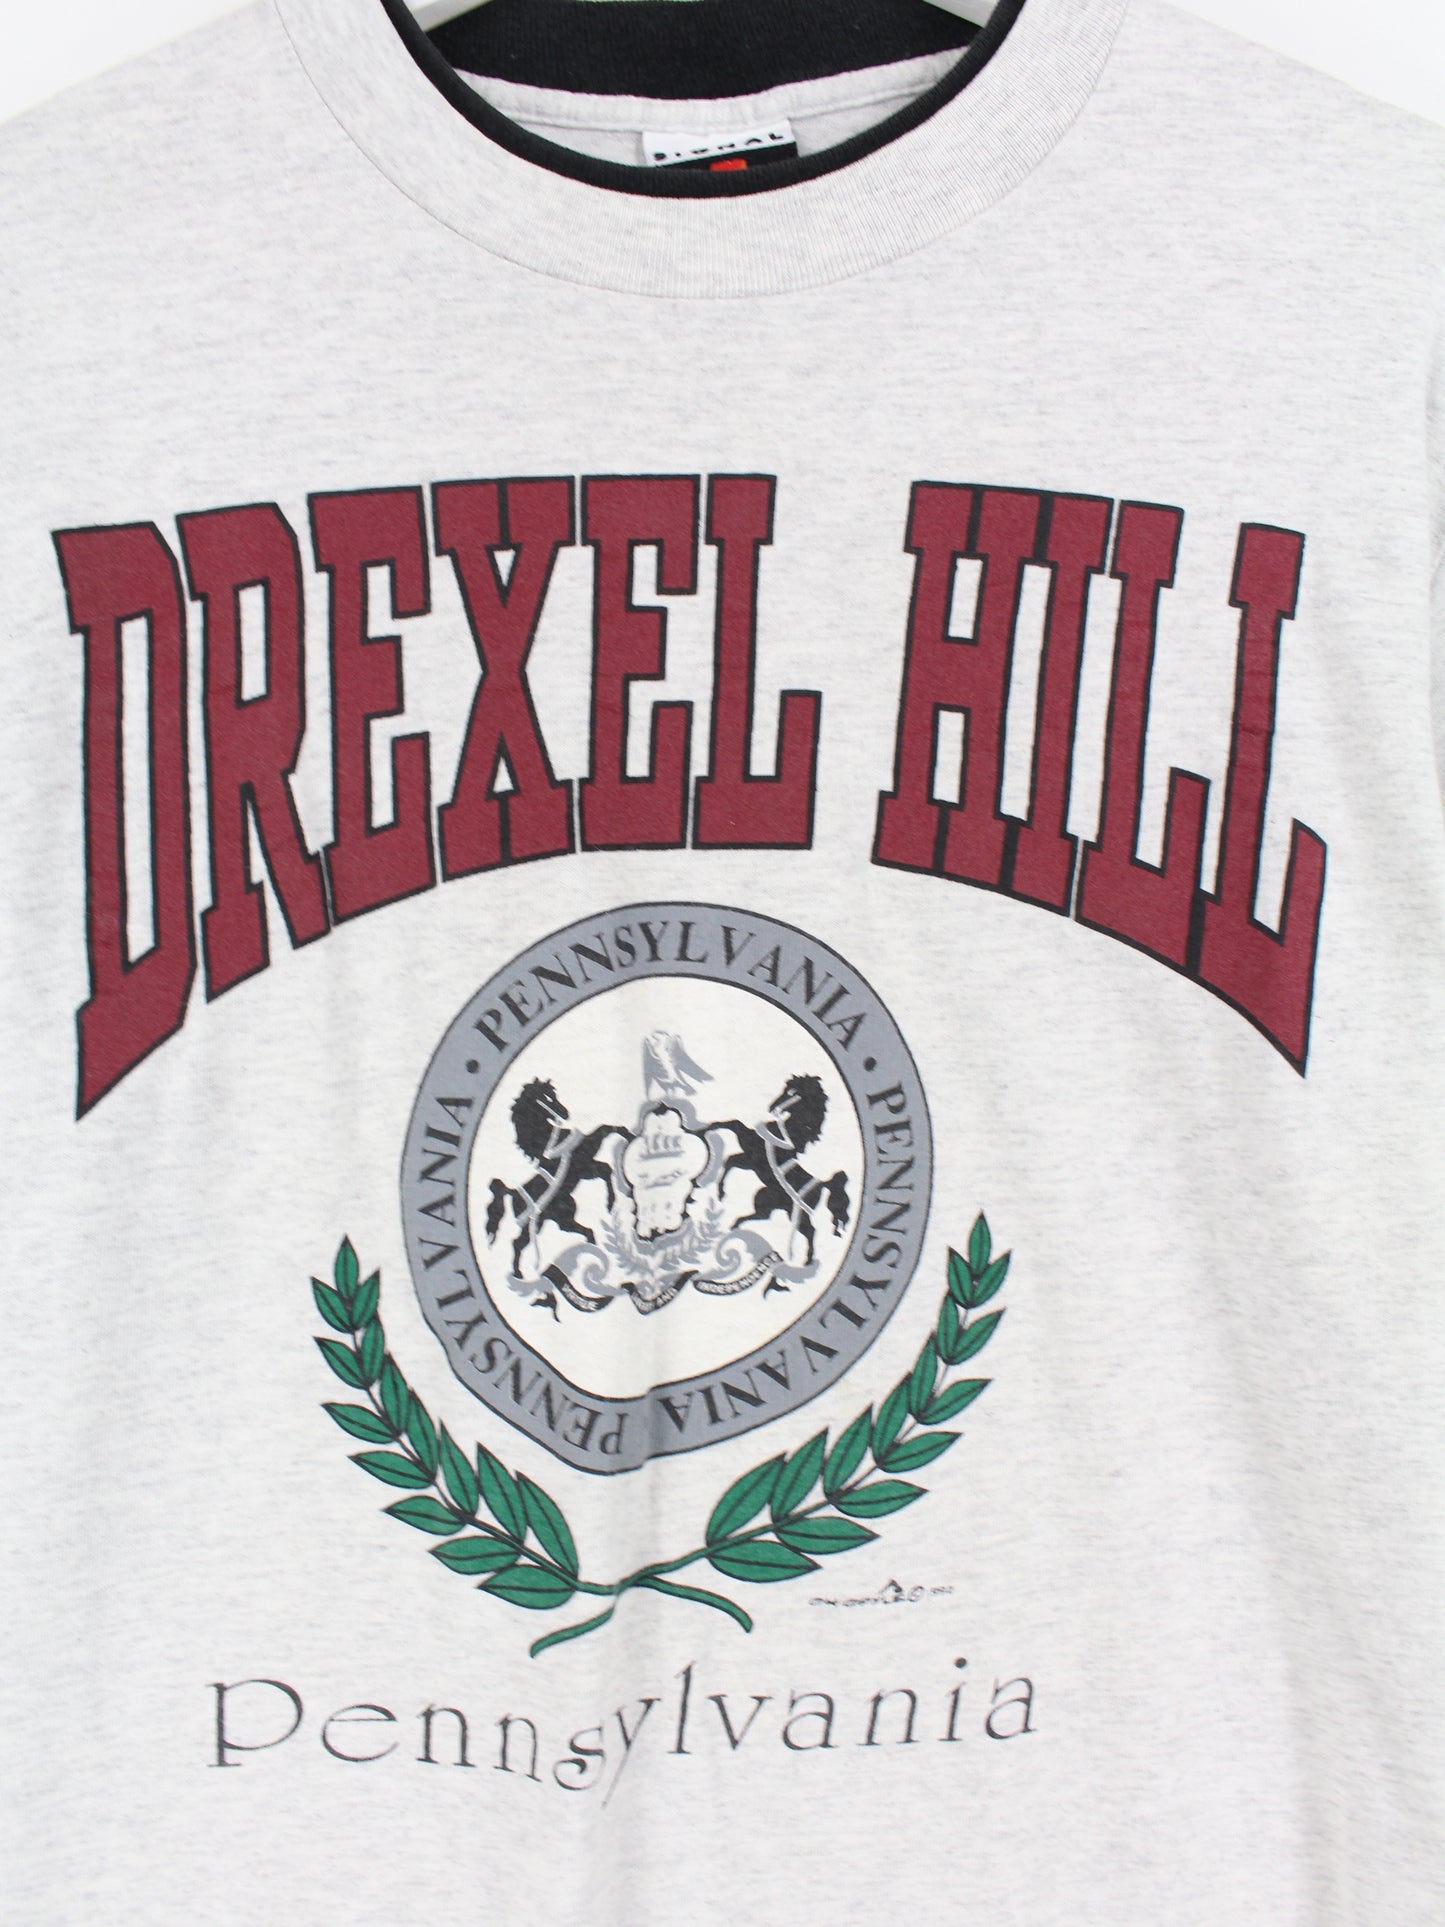 Drexel Hill 1992 T-Shirt Grau M